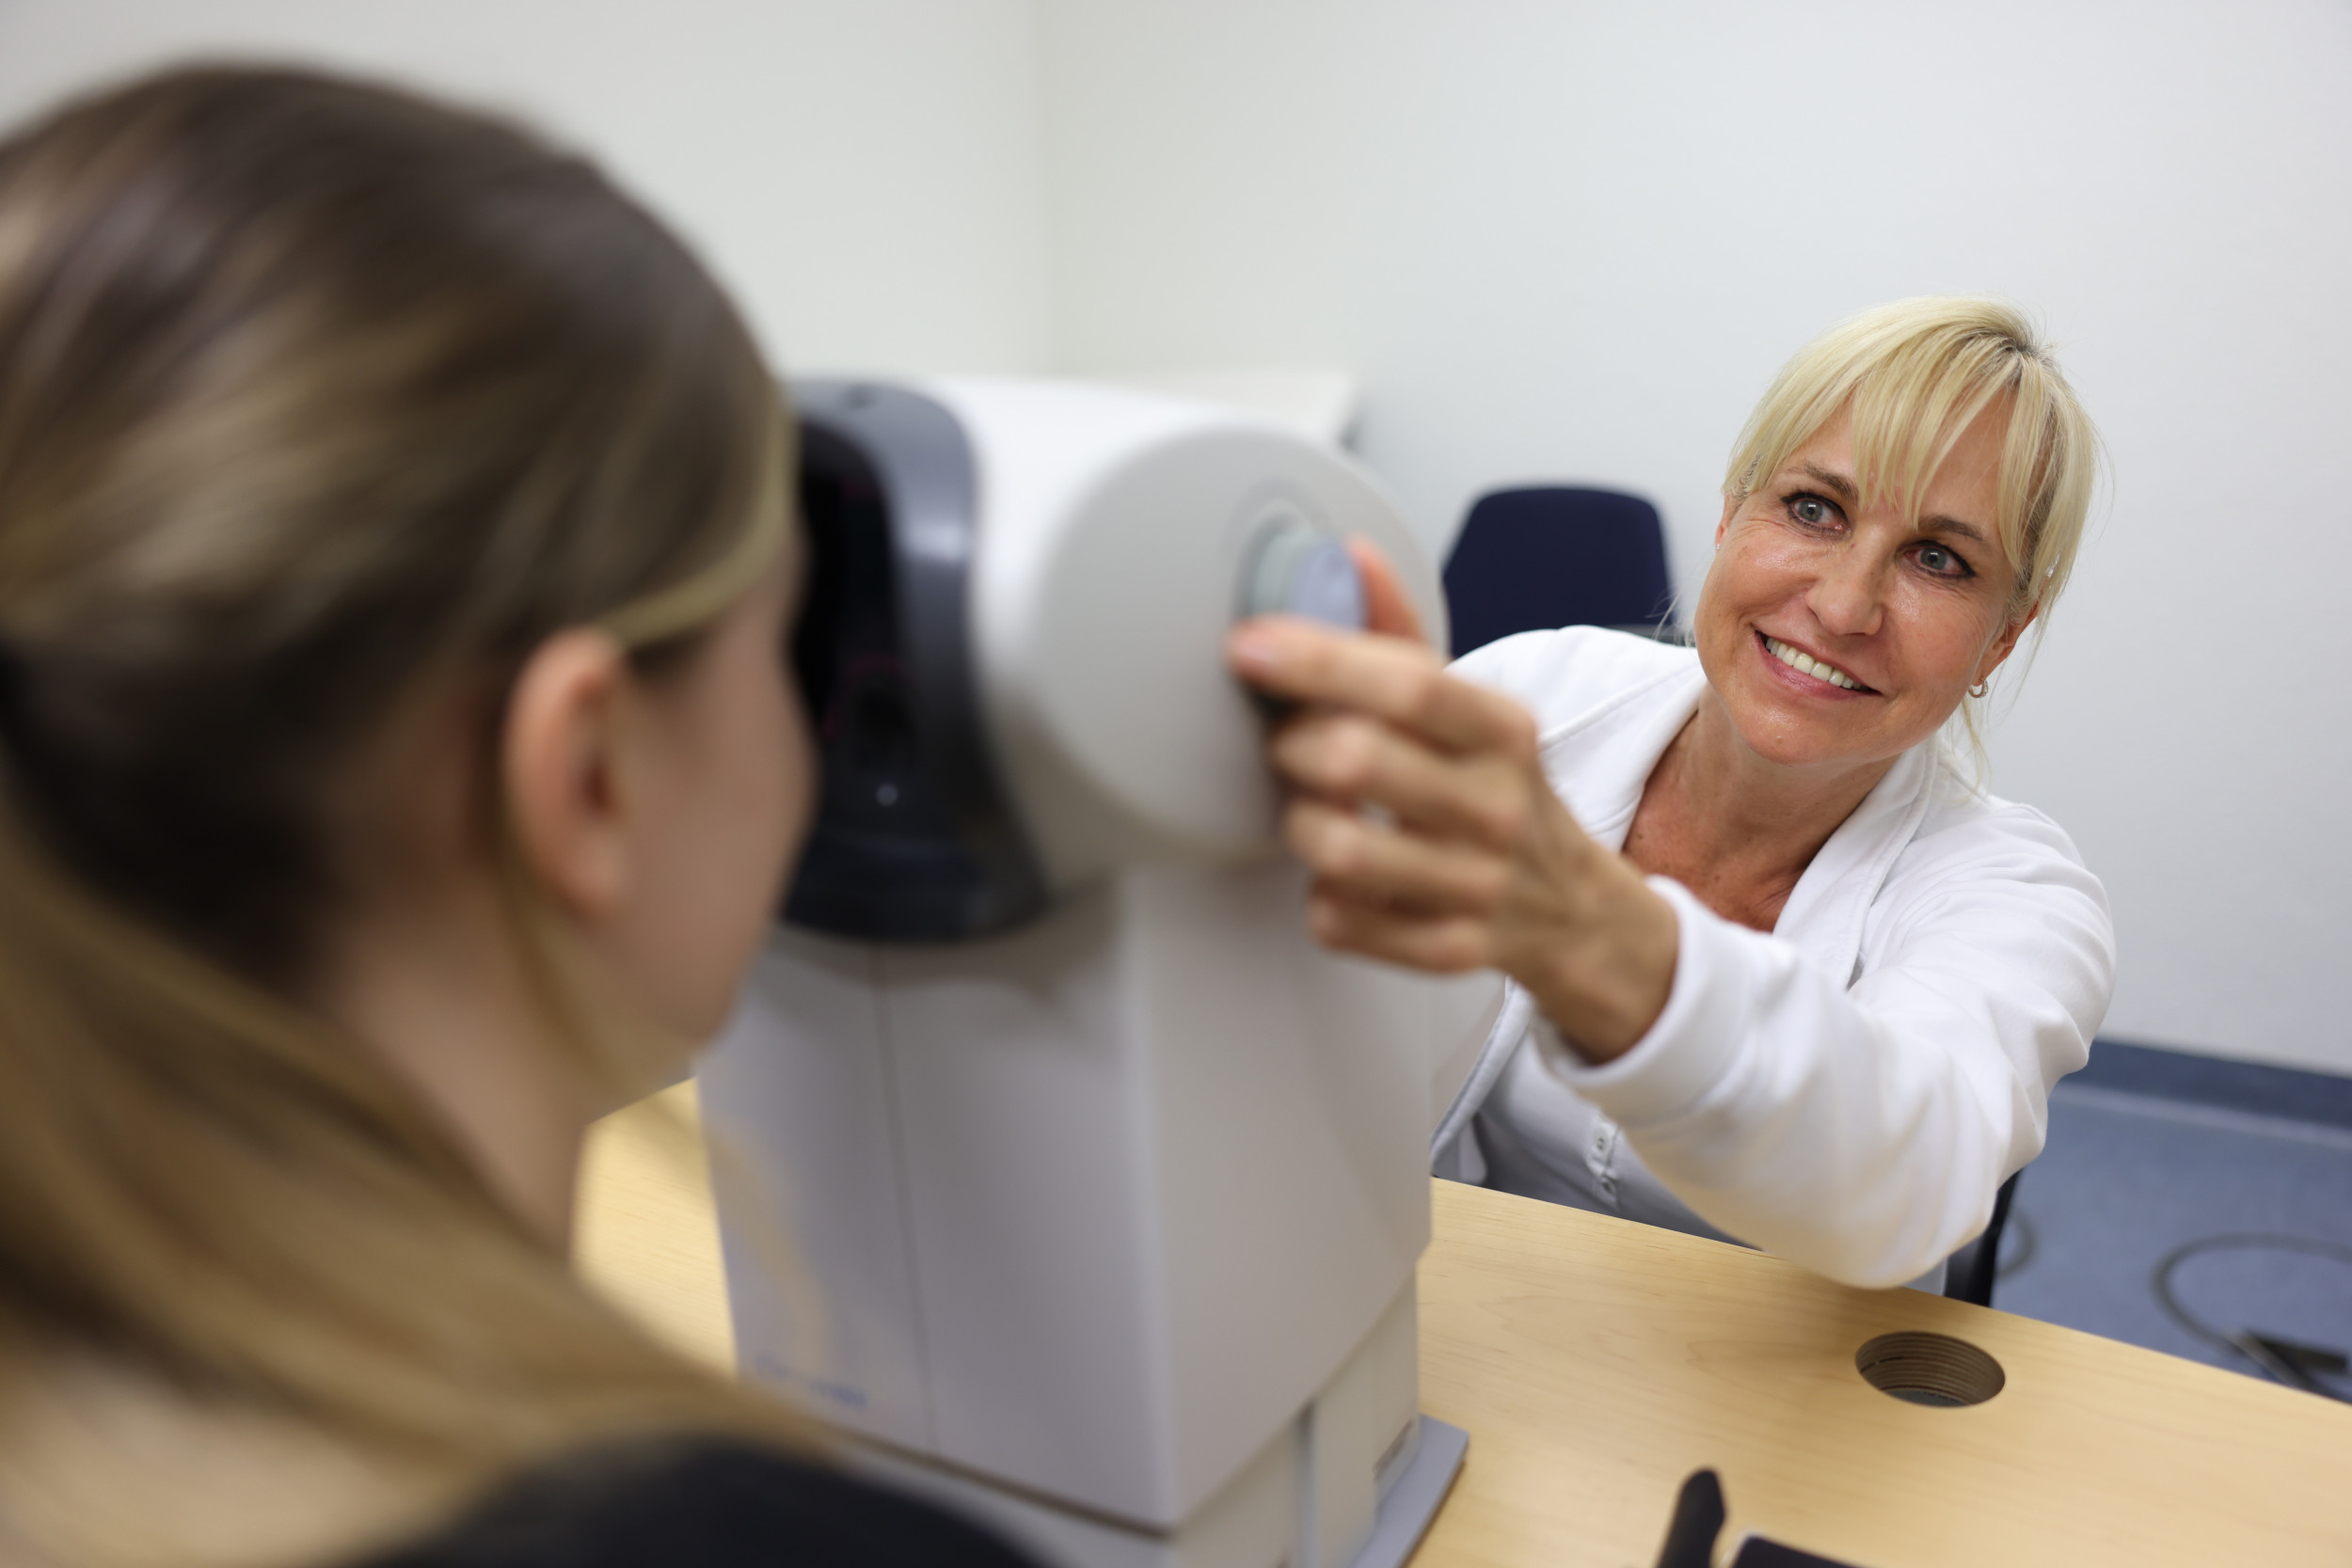 Two women during an eye test